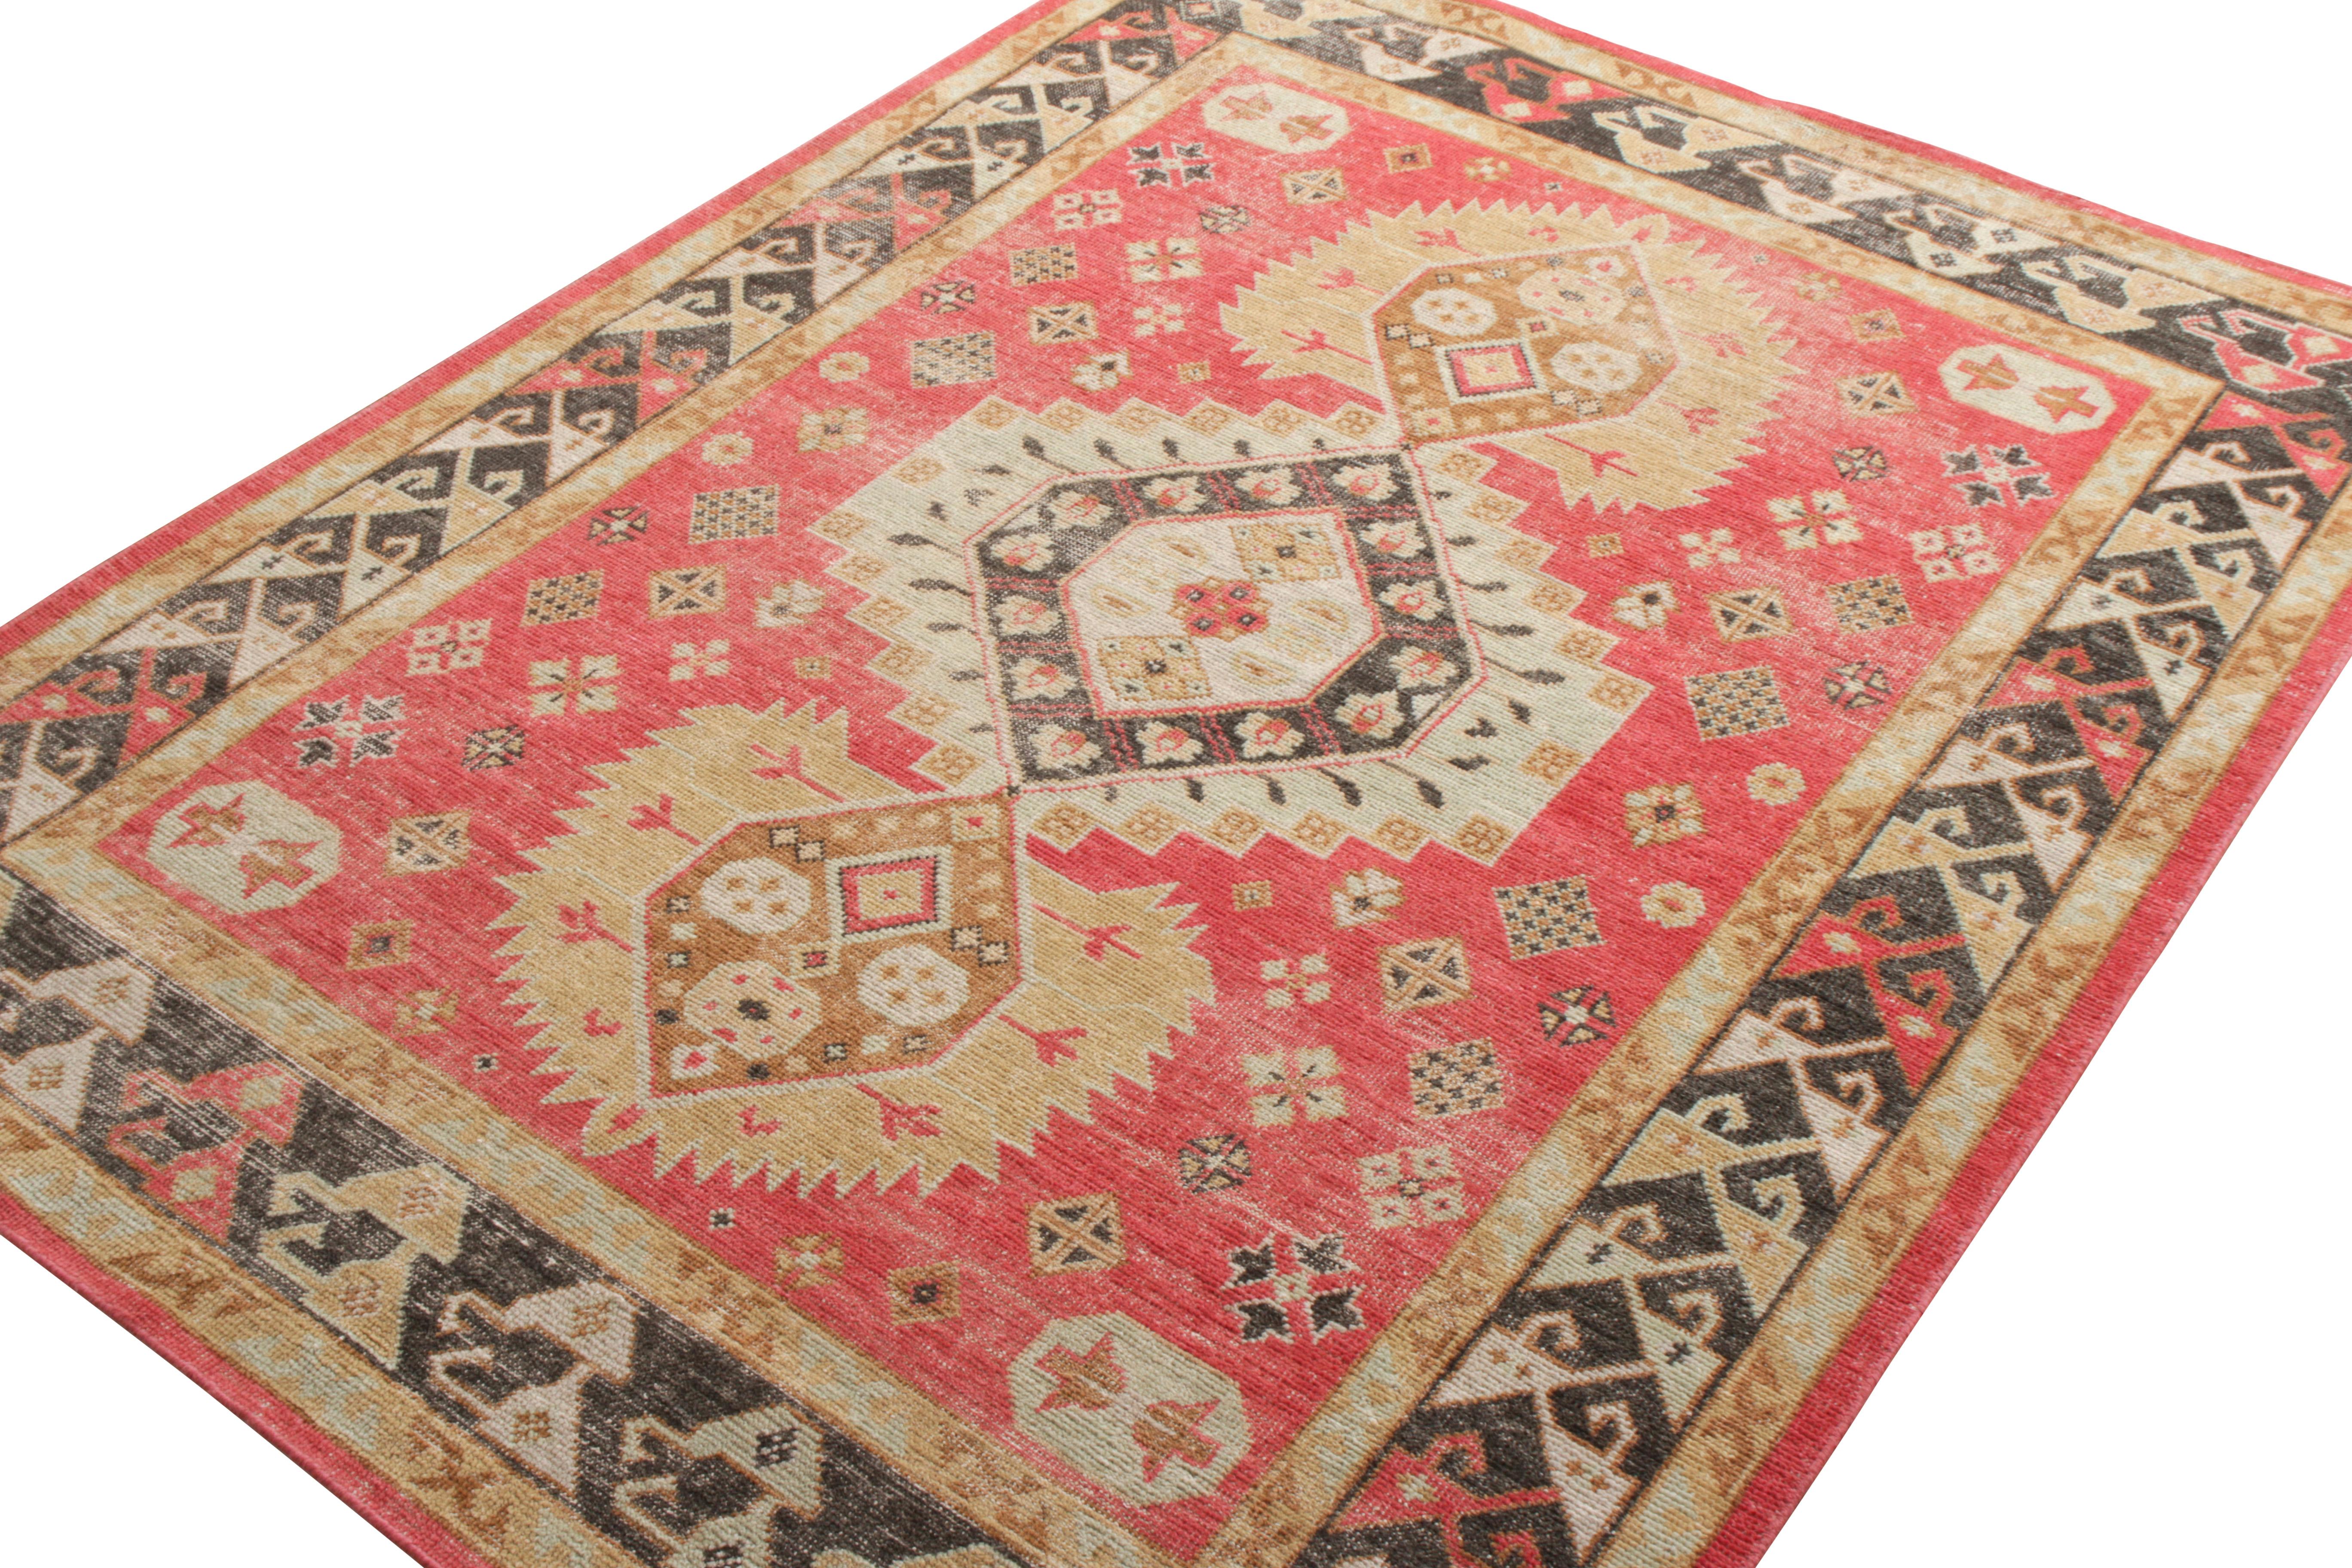 Rug & Kilim's Distressed Classic Style Teppich in Rot, Beige-Braun mit Medaillon-Muster (Stammeskunst) im Angebot